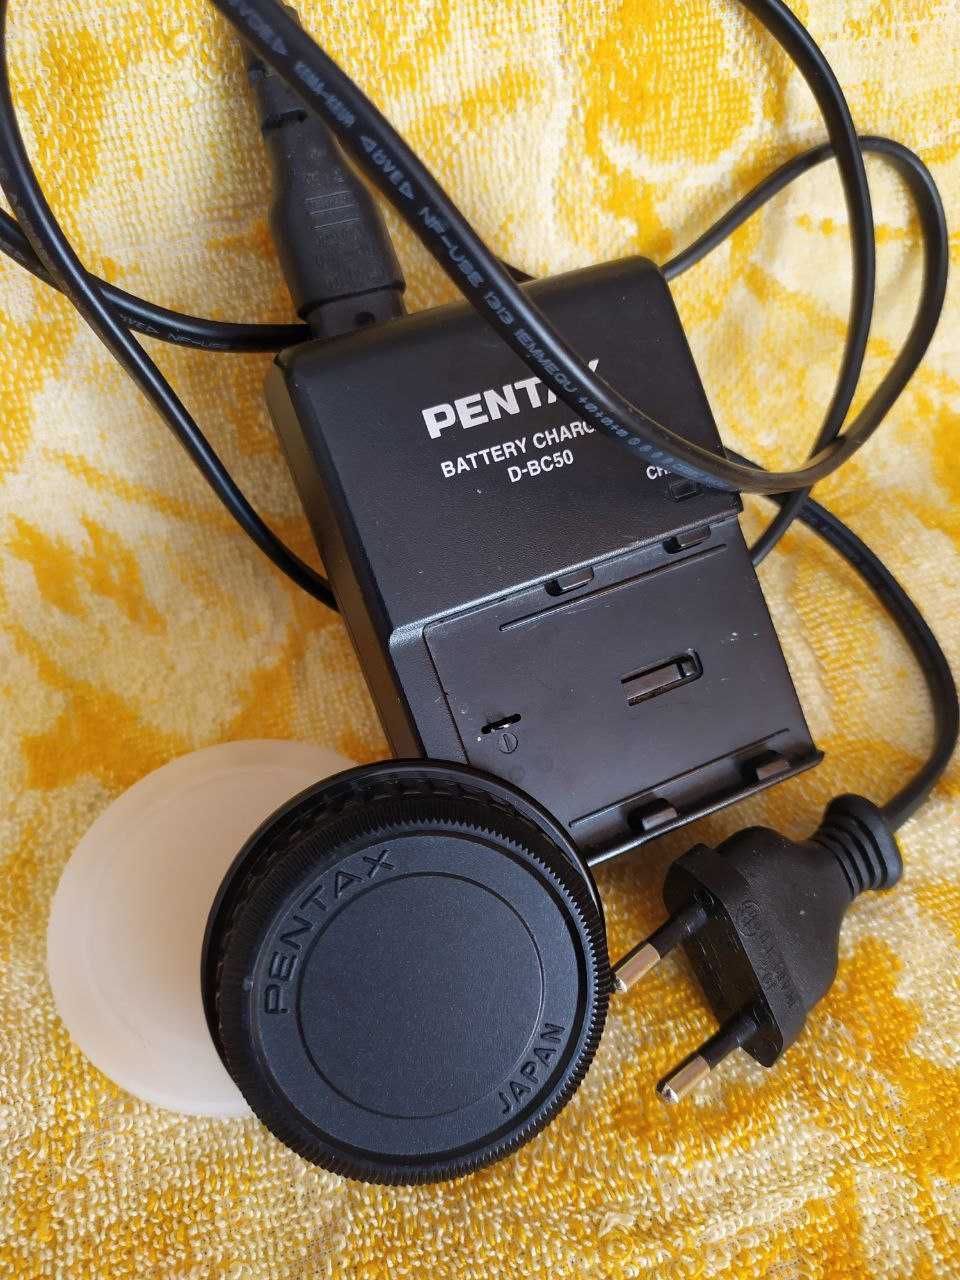 Pentax K10D + DA 18-55mm KIT